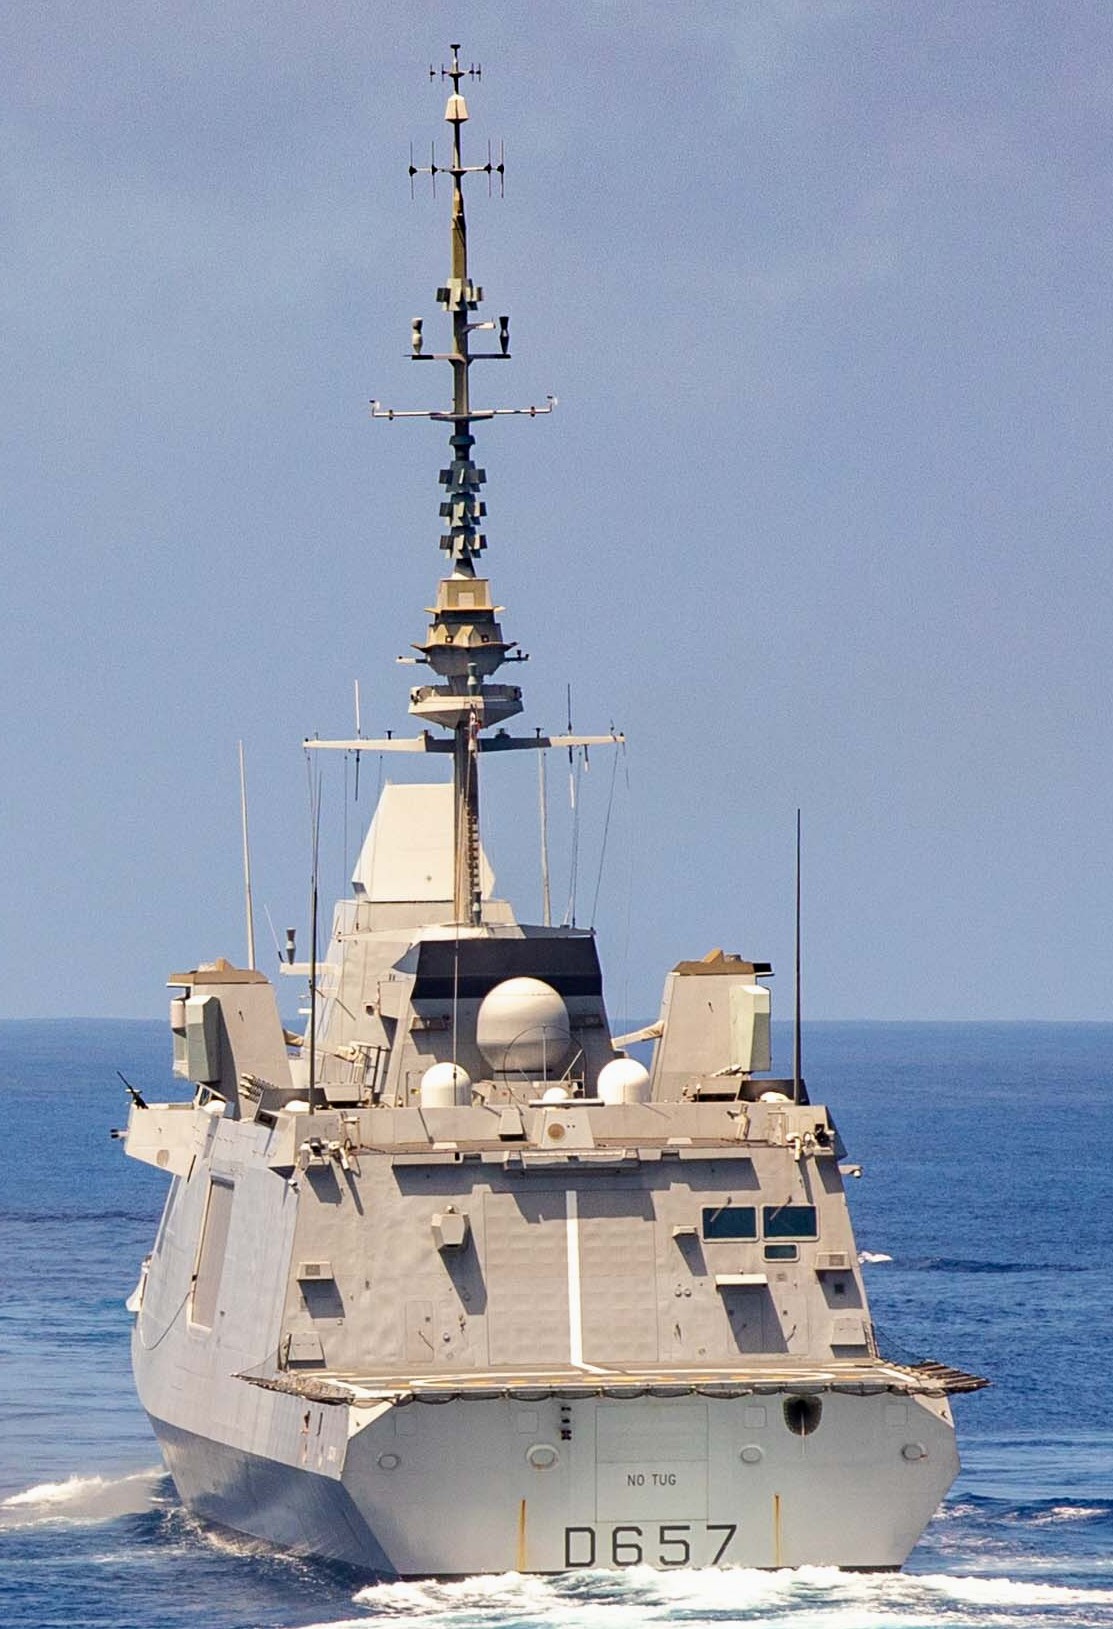 d-657 fs lorraine fremm aquitaine class frigate fregate multi purpose french navy marine nationale 17